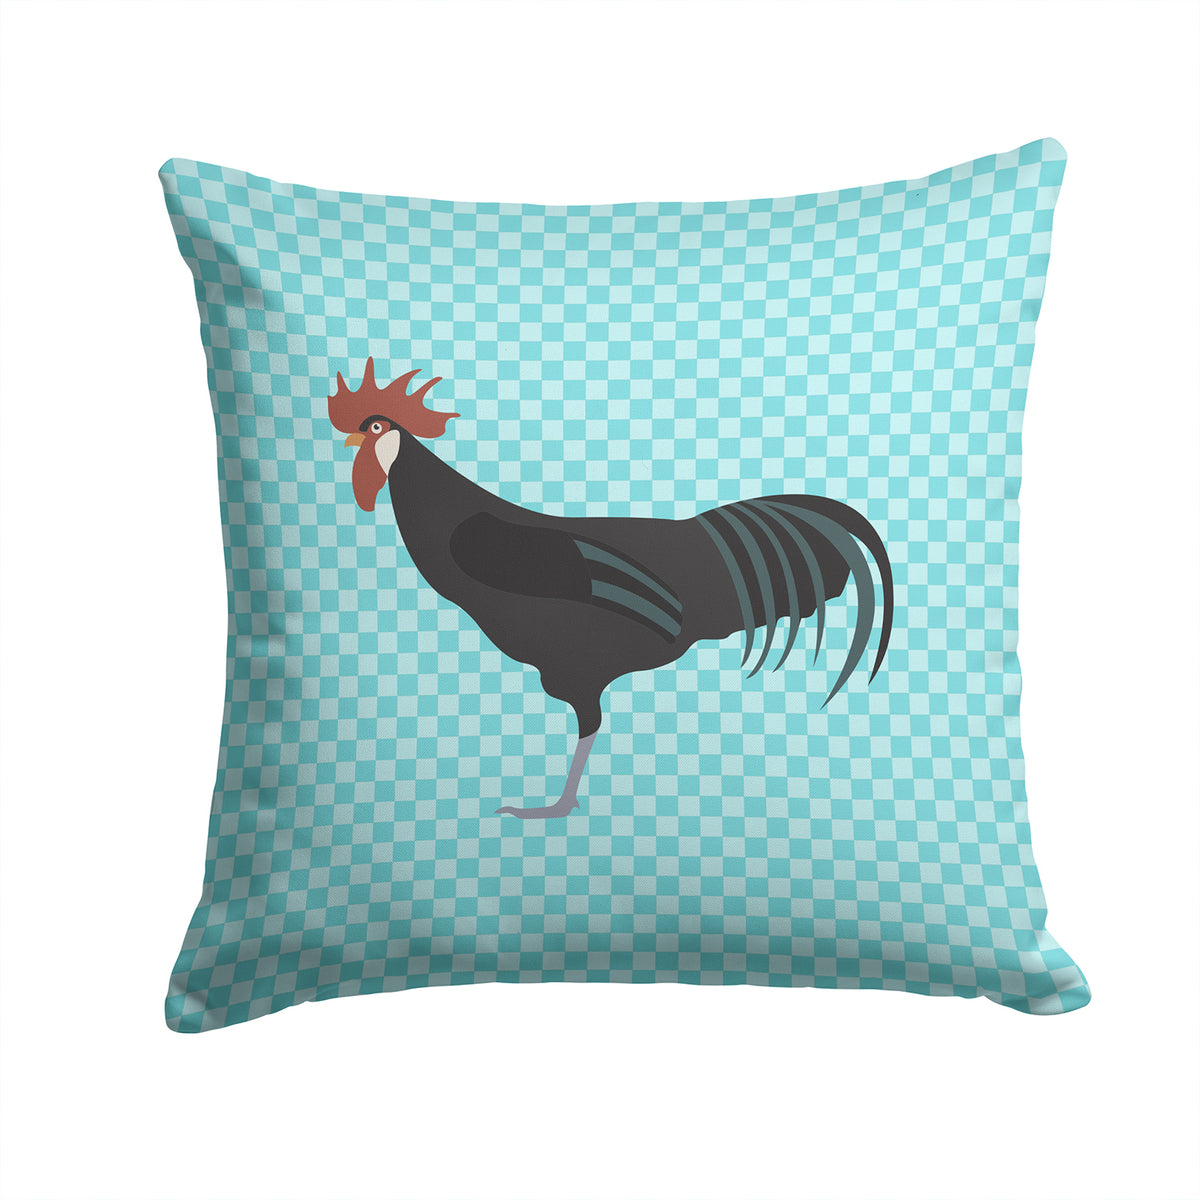 Minorca Ctalalan Chicken Blue Check Fabric Decorative Pillow BB8015PW1414 - the-store.com